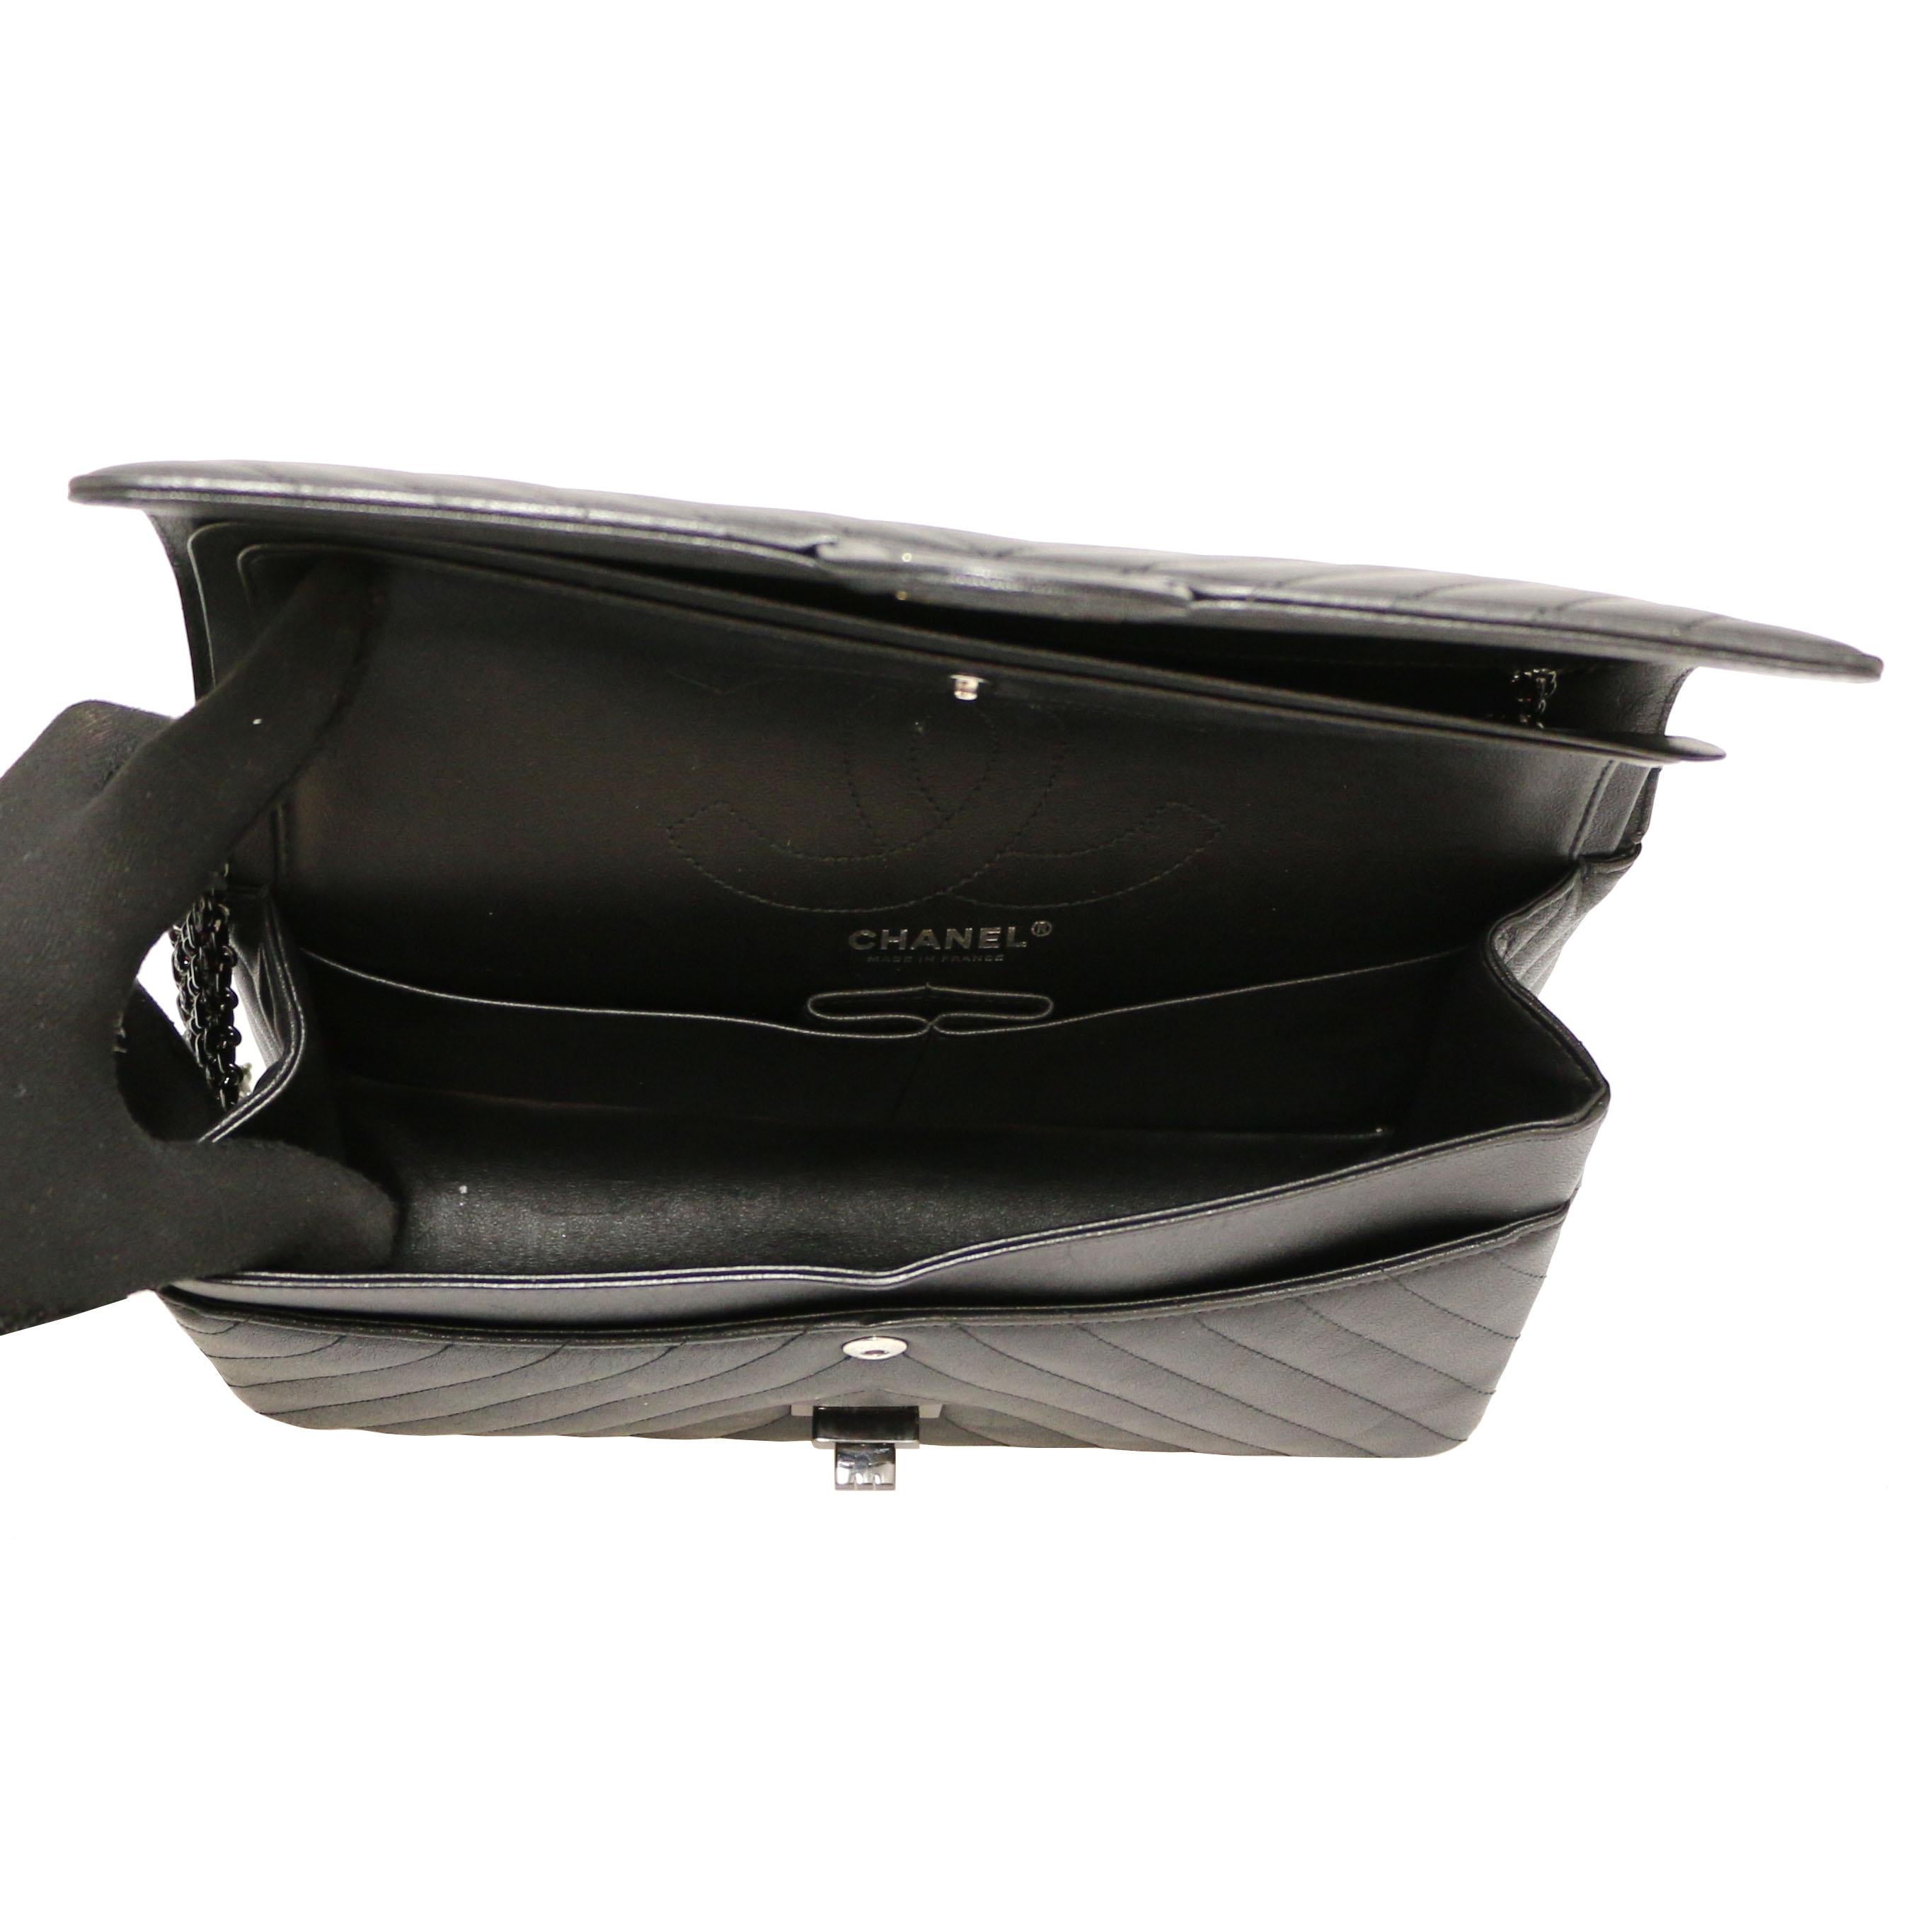 Chanel 255 All Black Bag For Sale 1